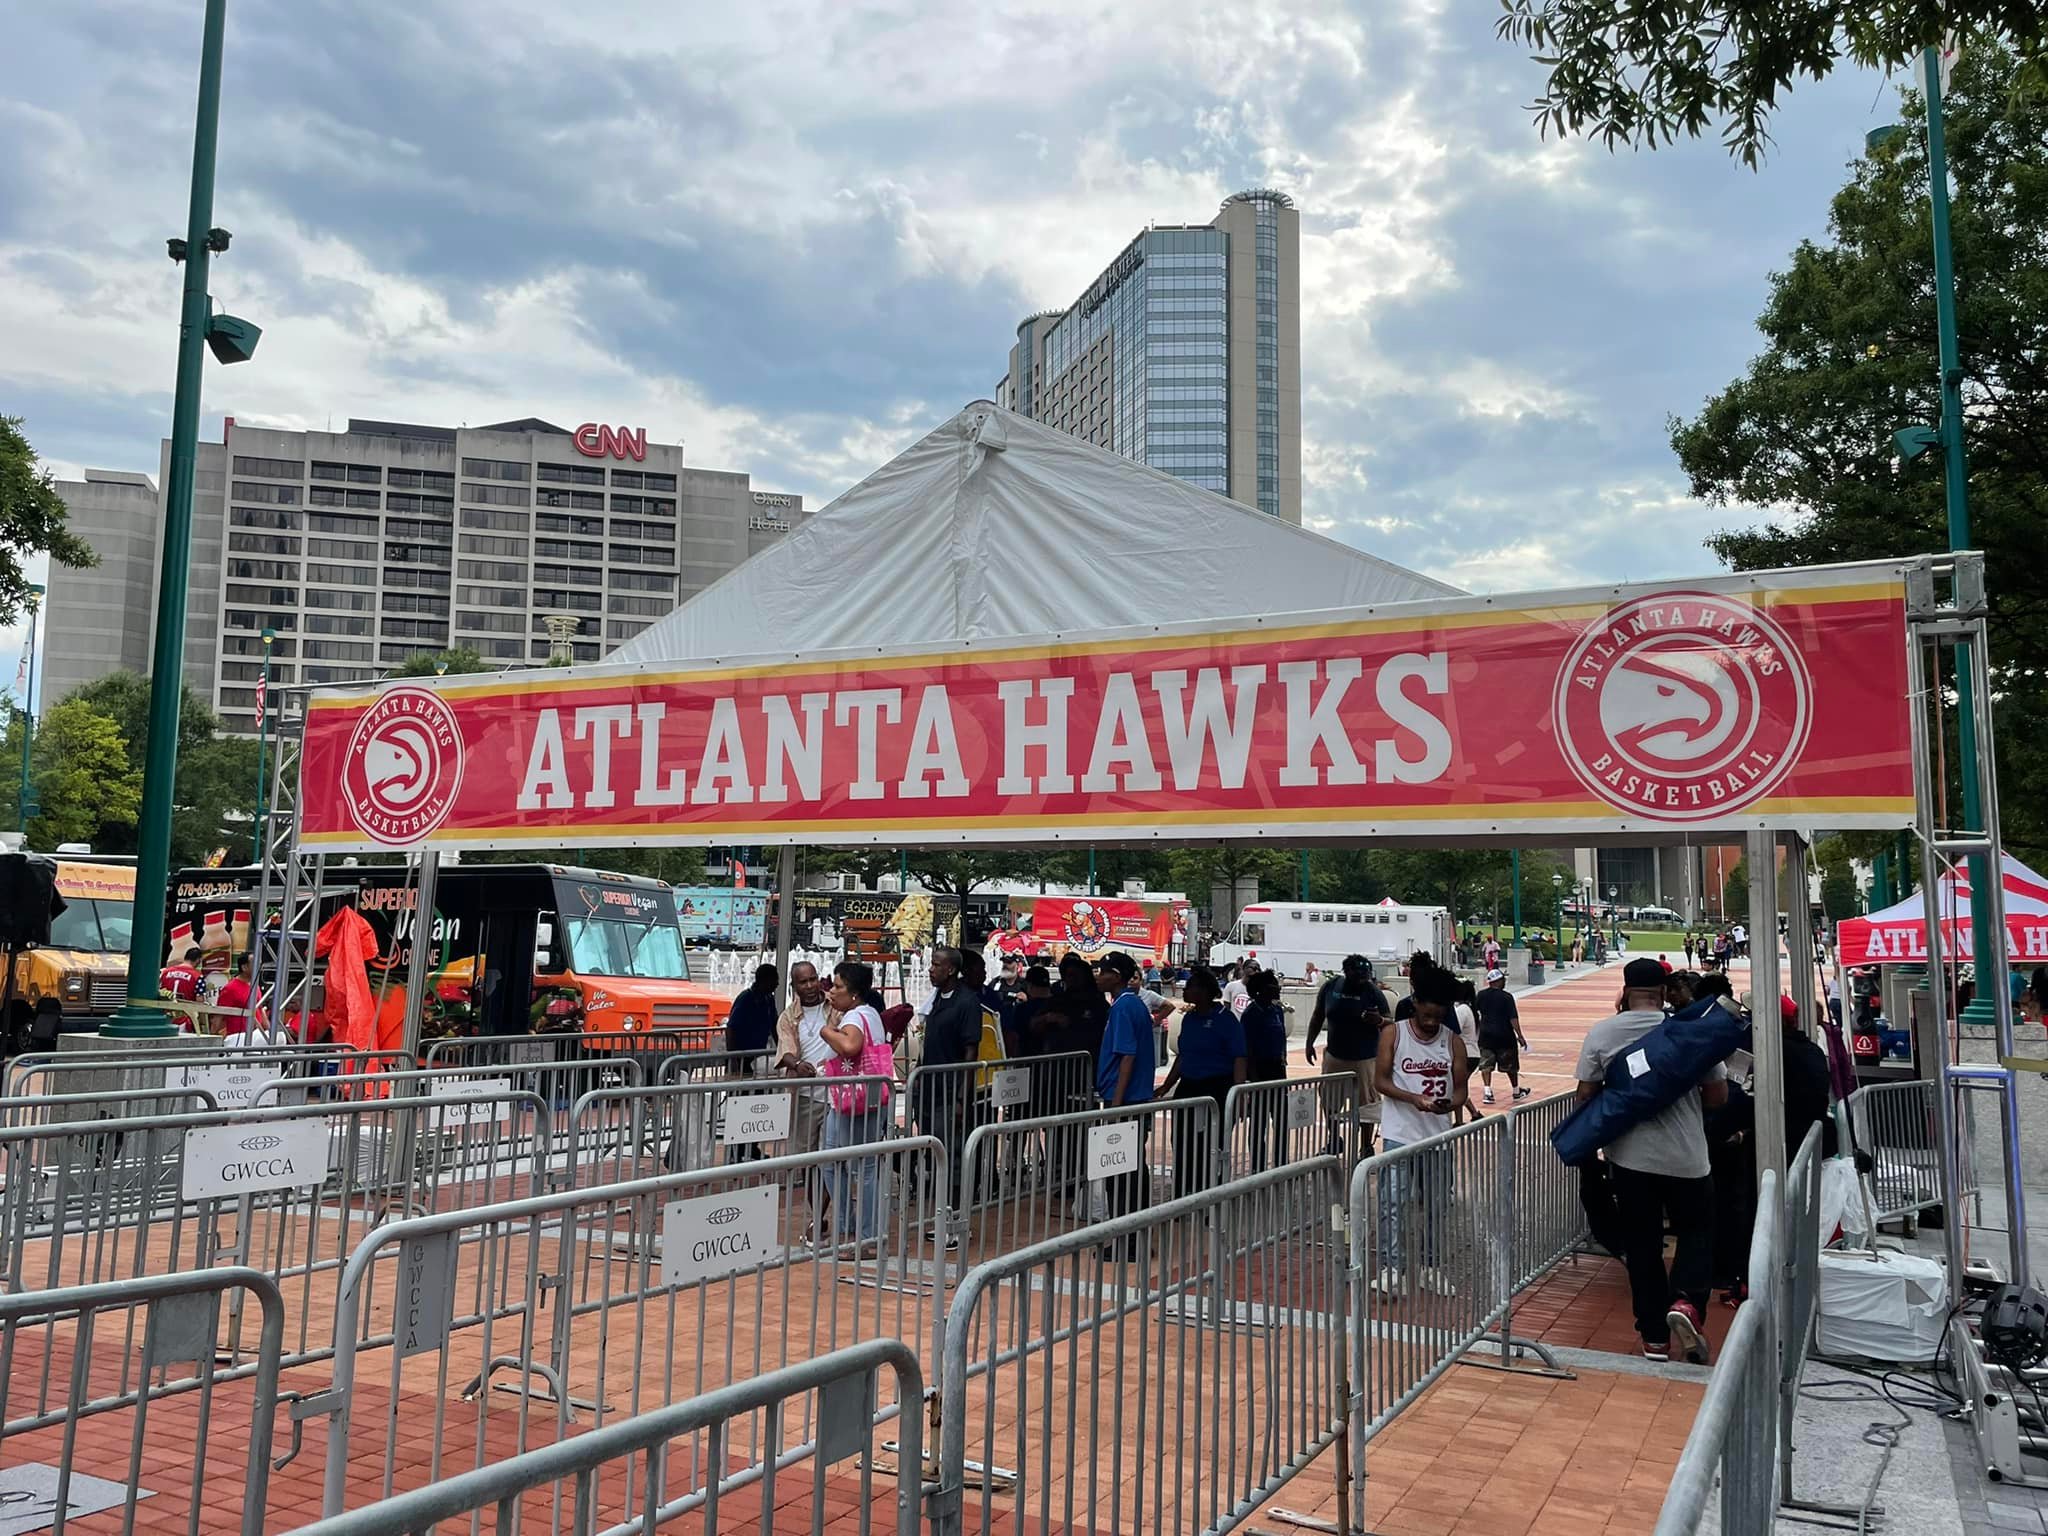 Atlanta Hawks giveaways this season